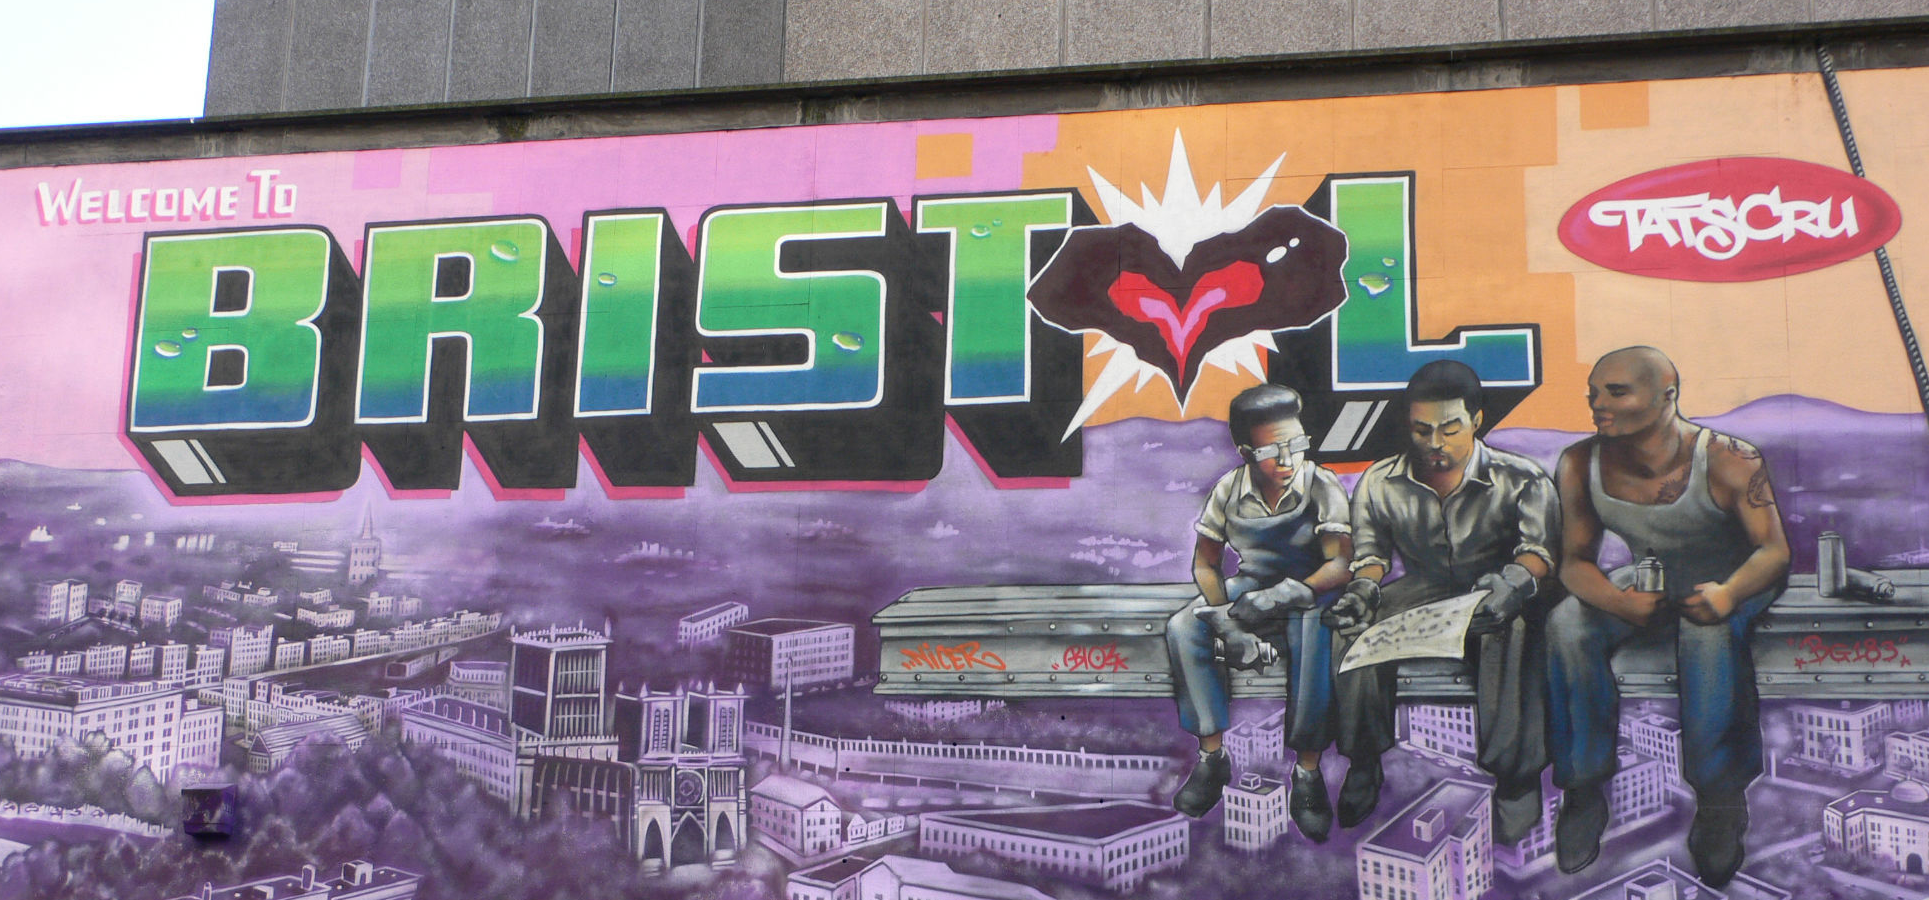 street art in Bristol